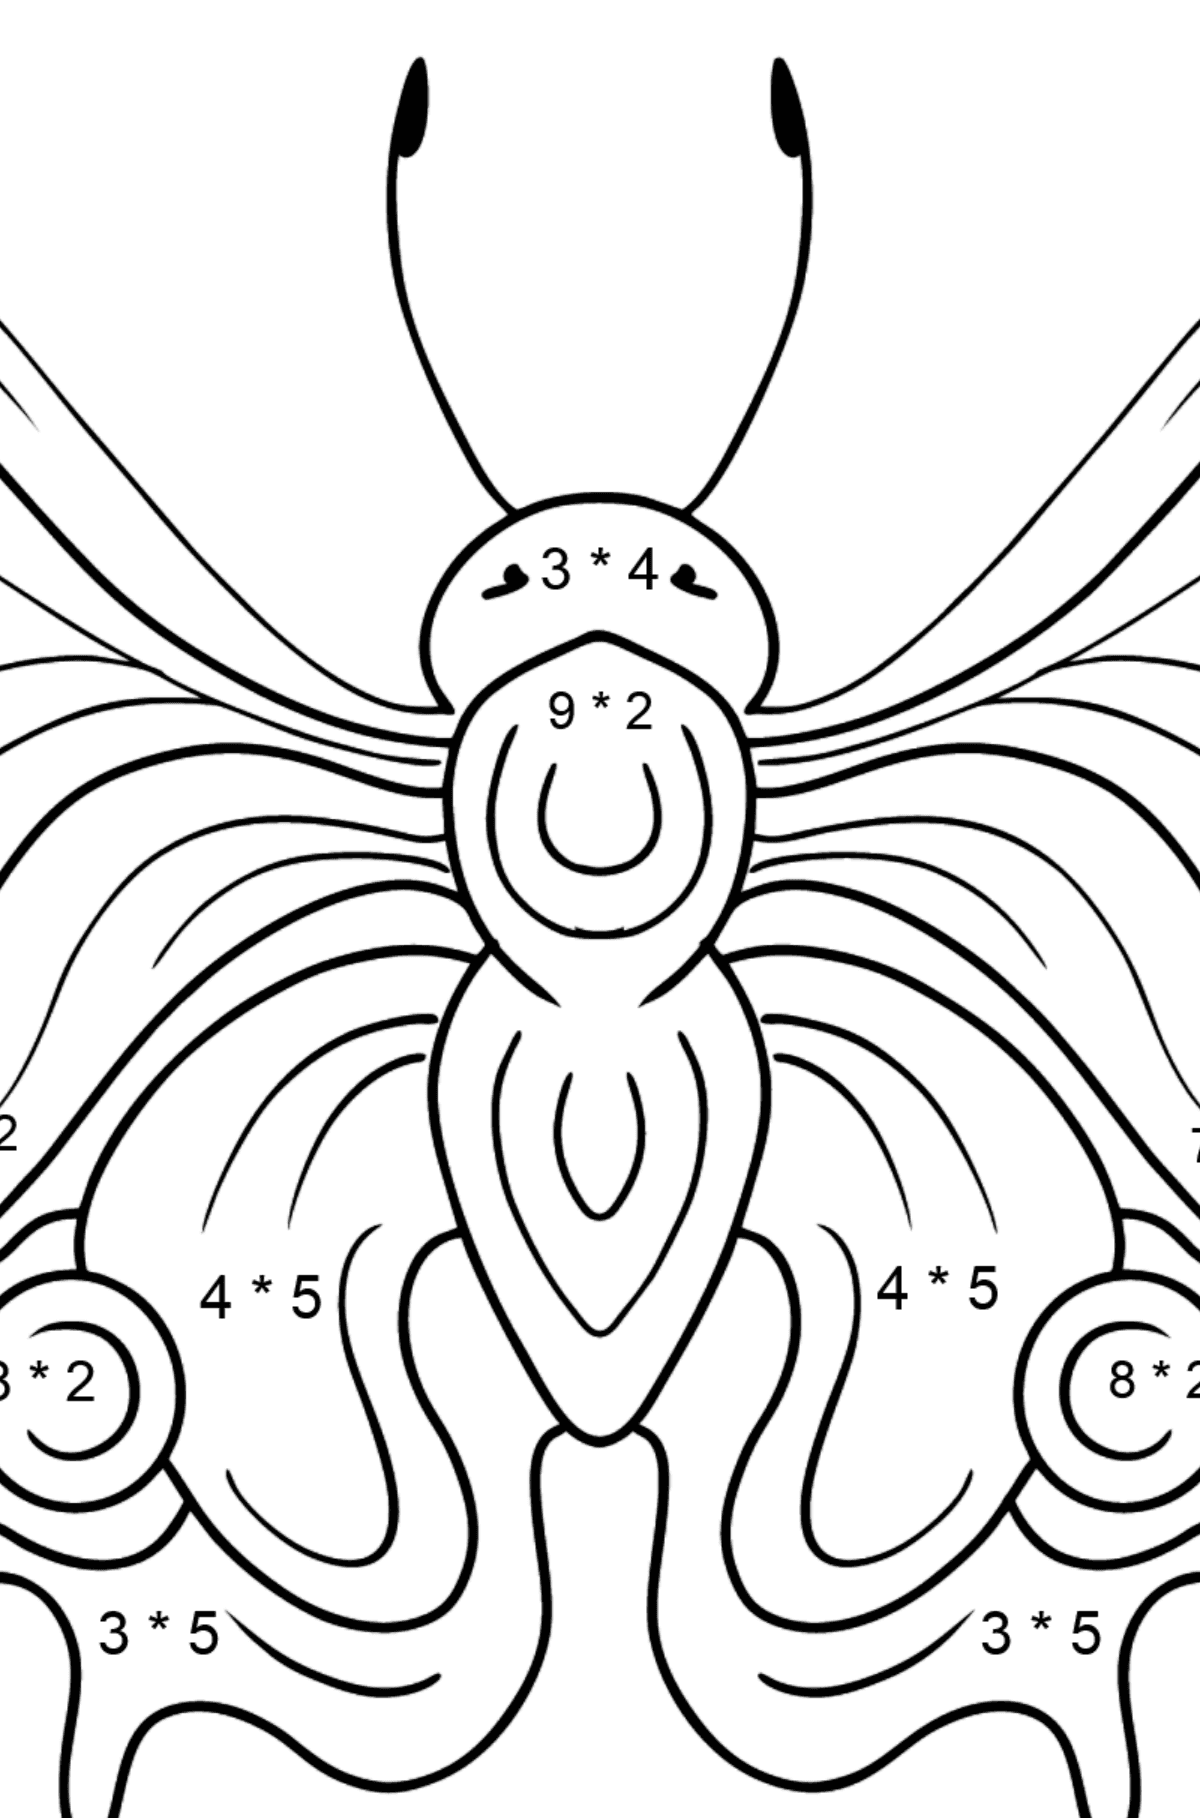 Peacock Butterfly Ausmalbild - Mathe Ausmalbilder - Multiplikation für Kinder